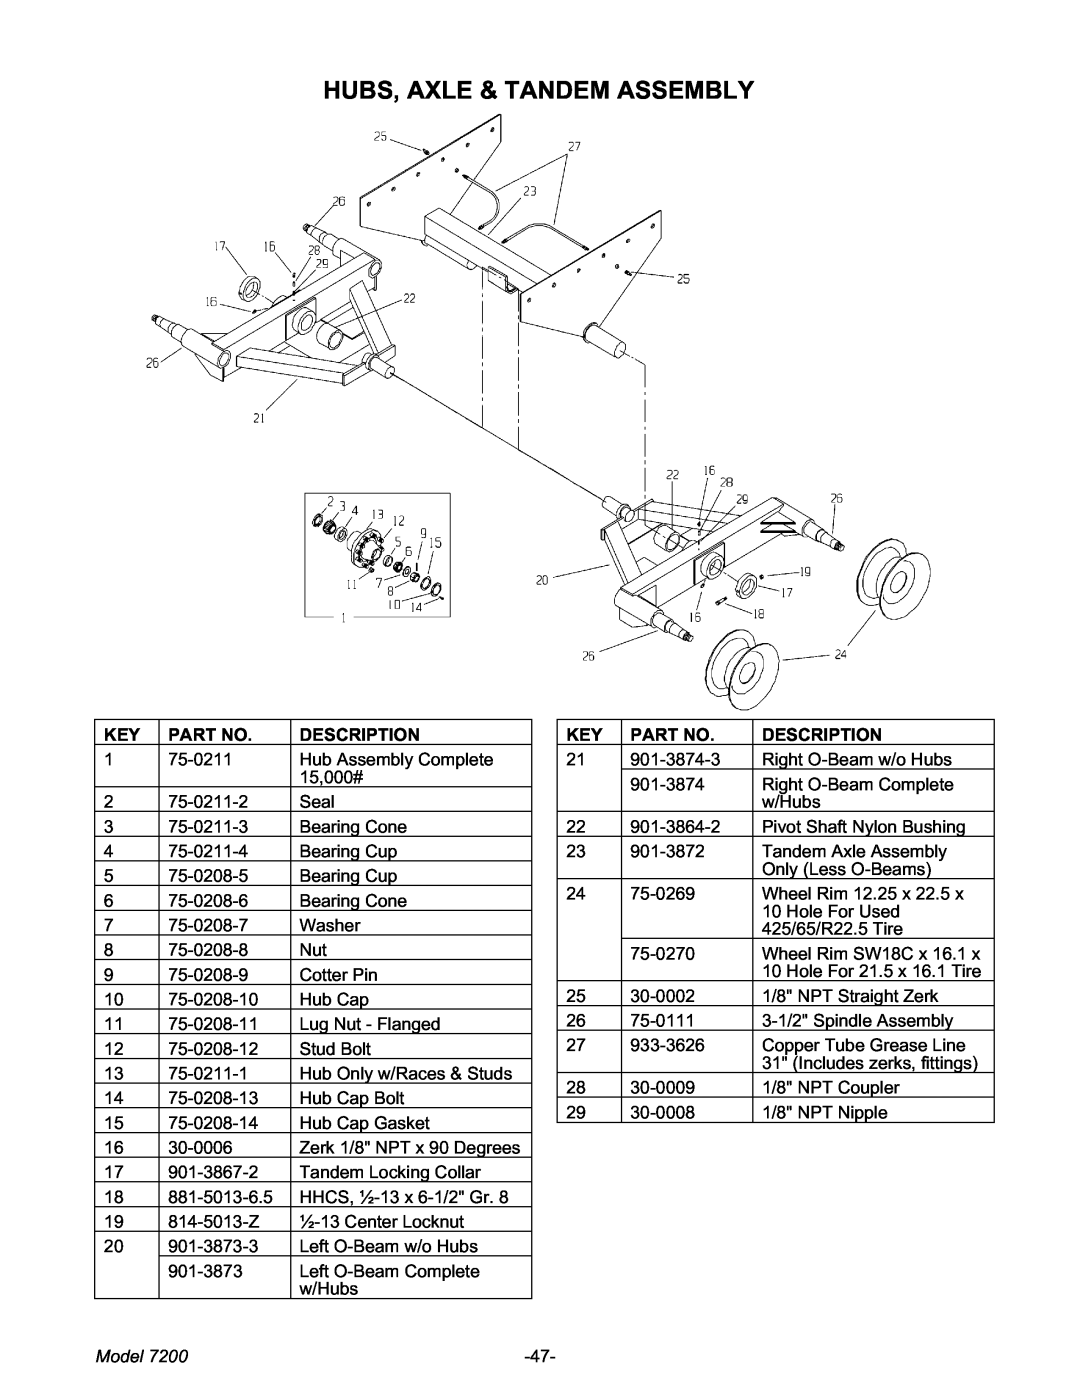 Meyer 7200 manual Hubs, Axle & Tandem Assembly, Model 